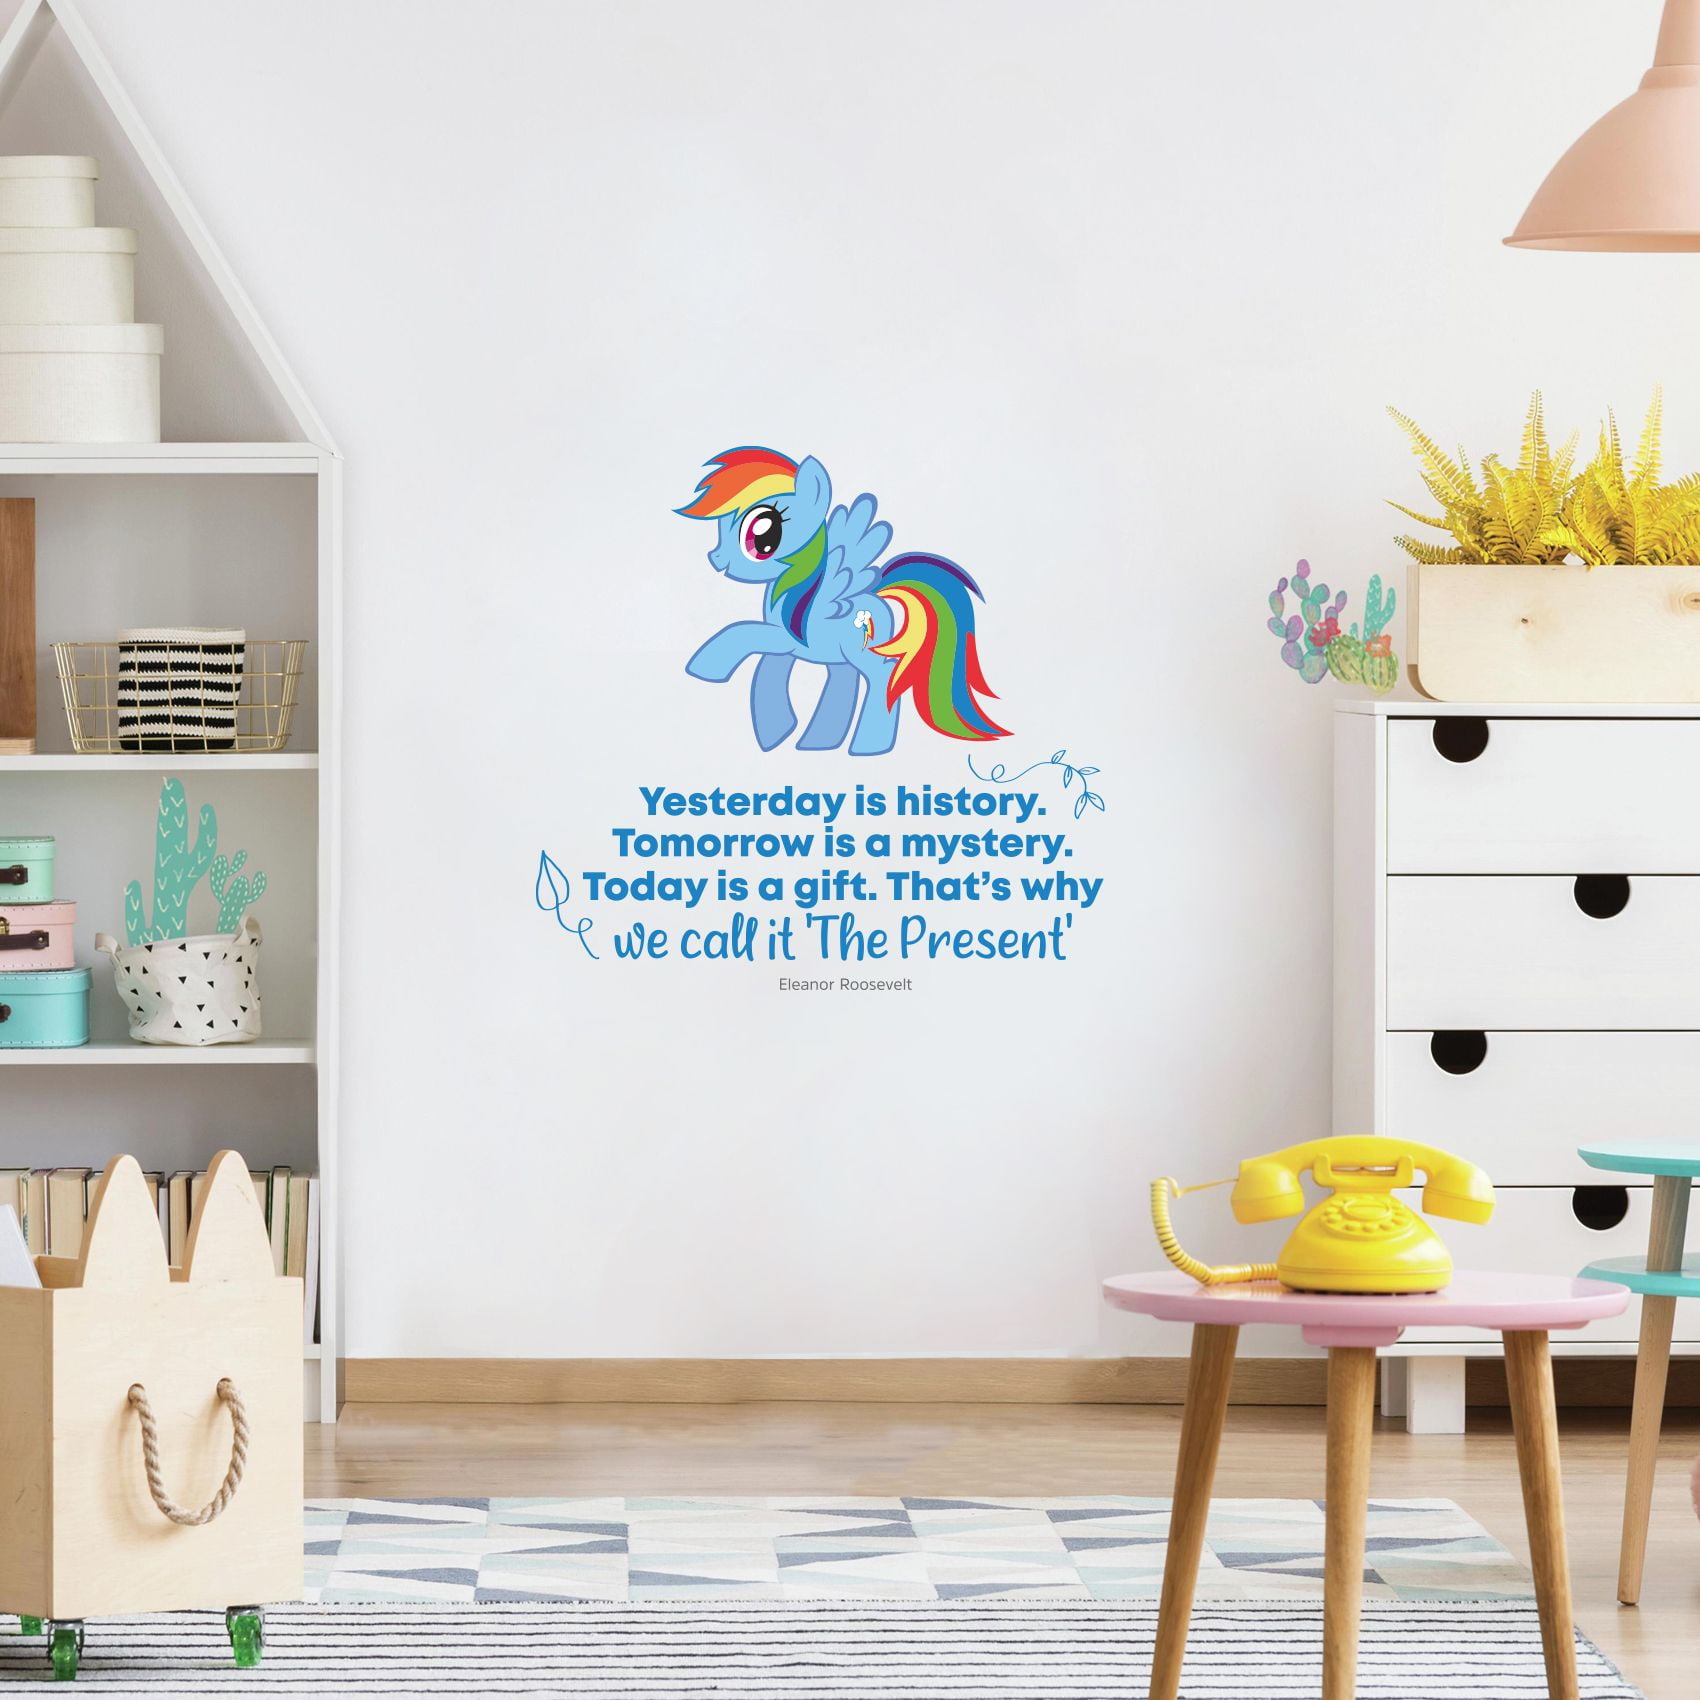 My Little Pony Rainbow Dash wall Kids Girls Bedroom Decal Wall Art Sticker Gift 